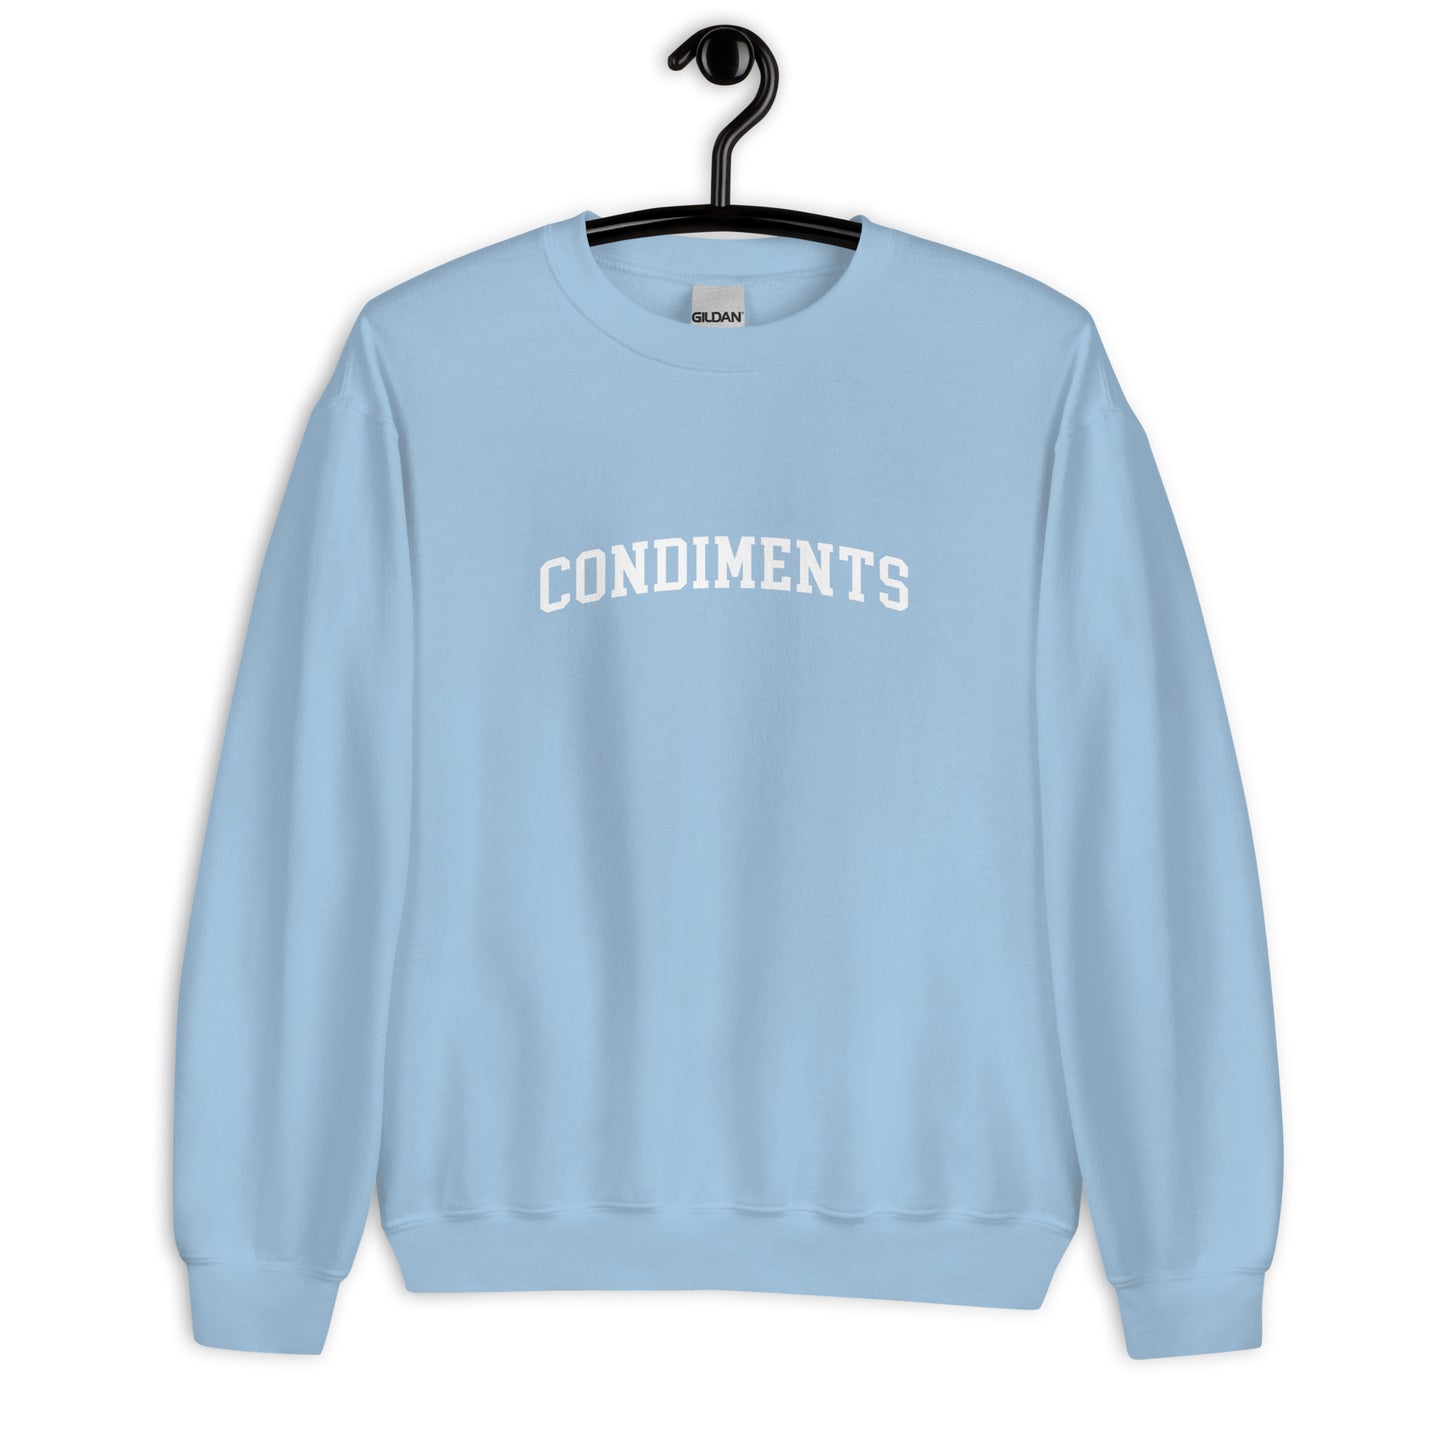 Condiments Sweatshirt - Arched Font